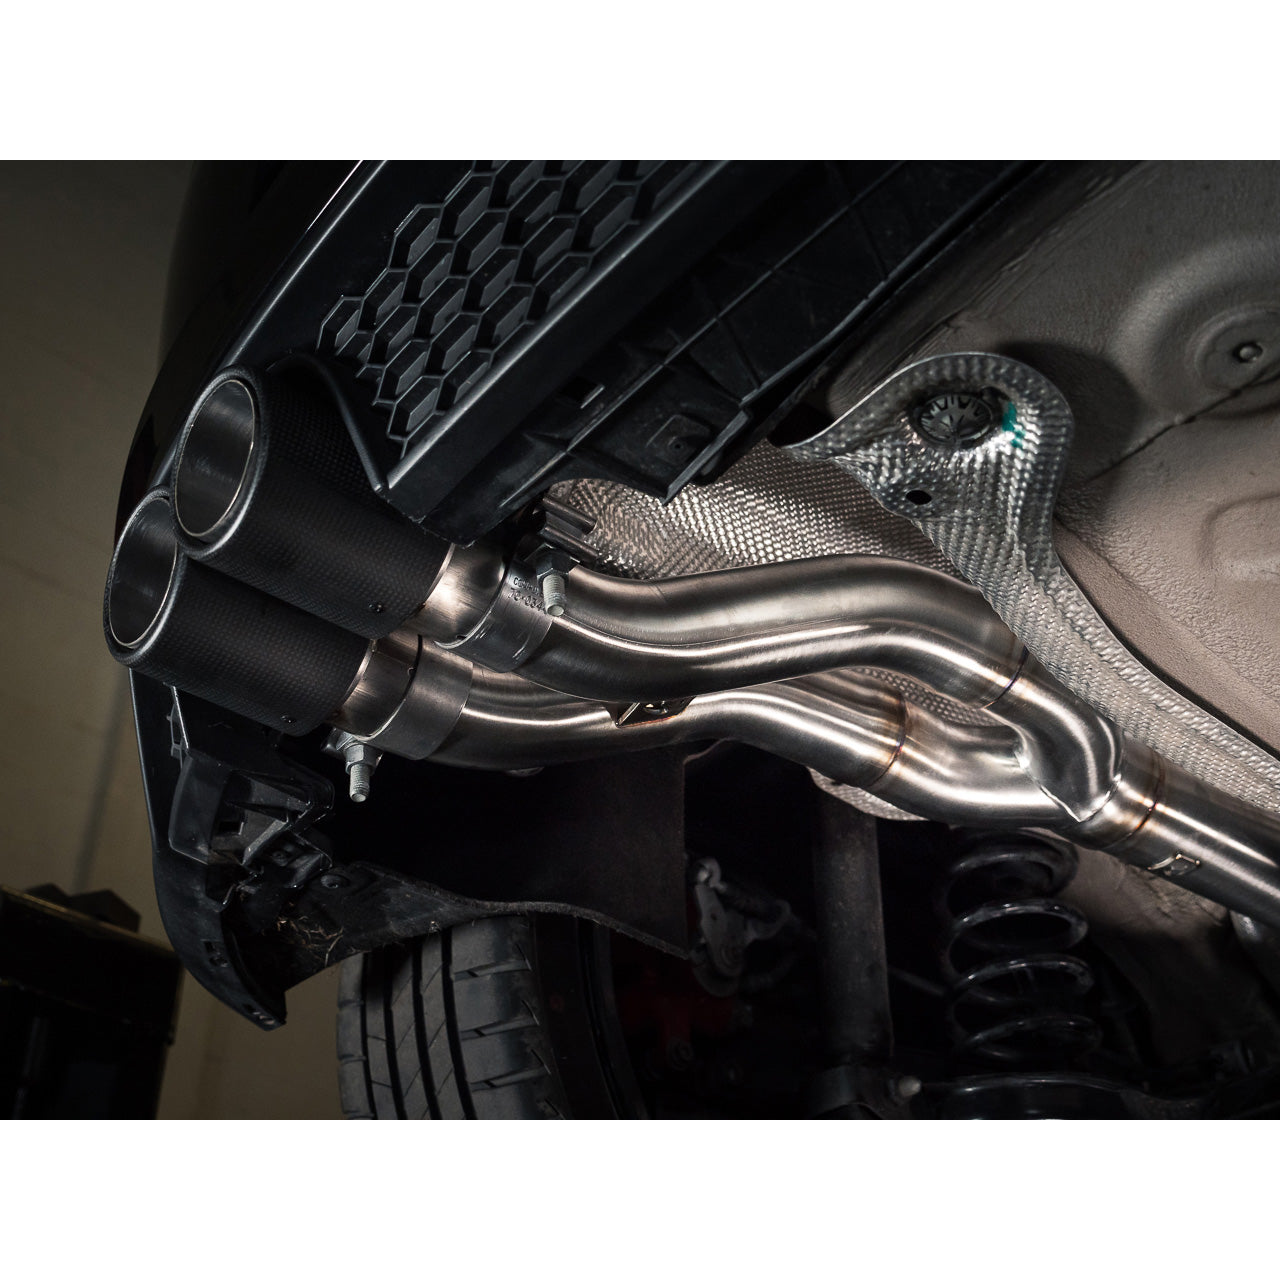 VW Polo GTI (AW) Mk6 2.0 TSI (17-18 Pre-GPF Models) Venom Rear Box Delete Race Cat Back Performance Exhaust - Wayside Performance 